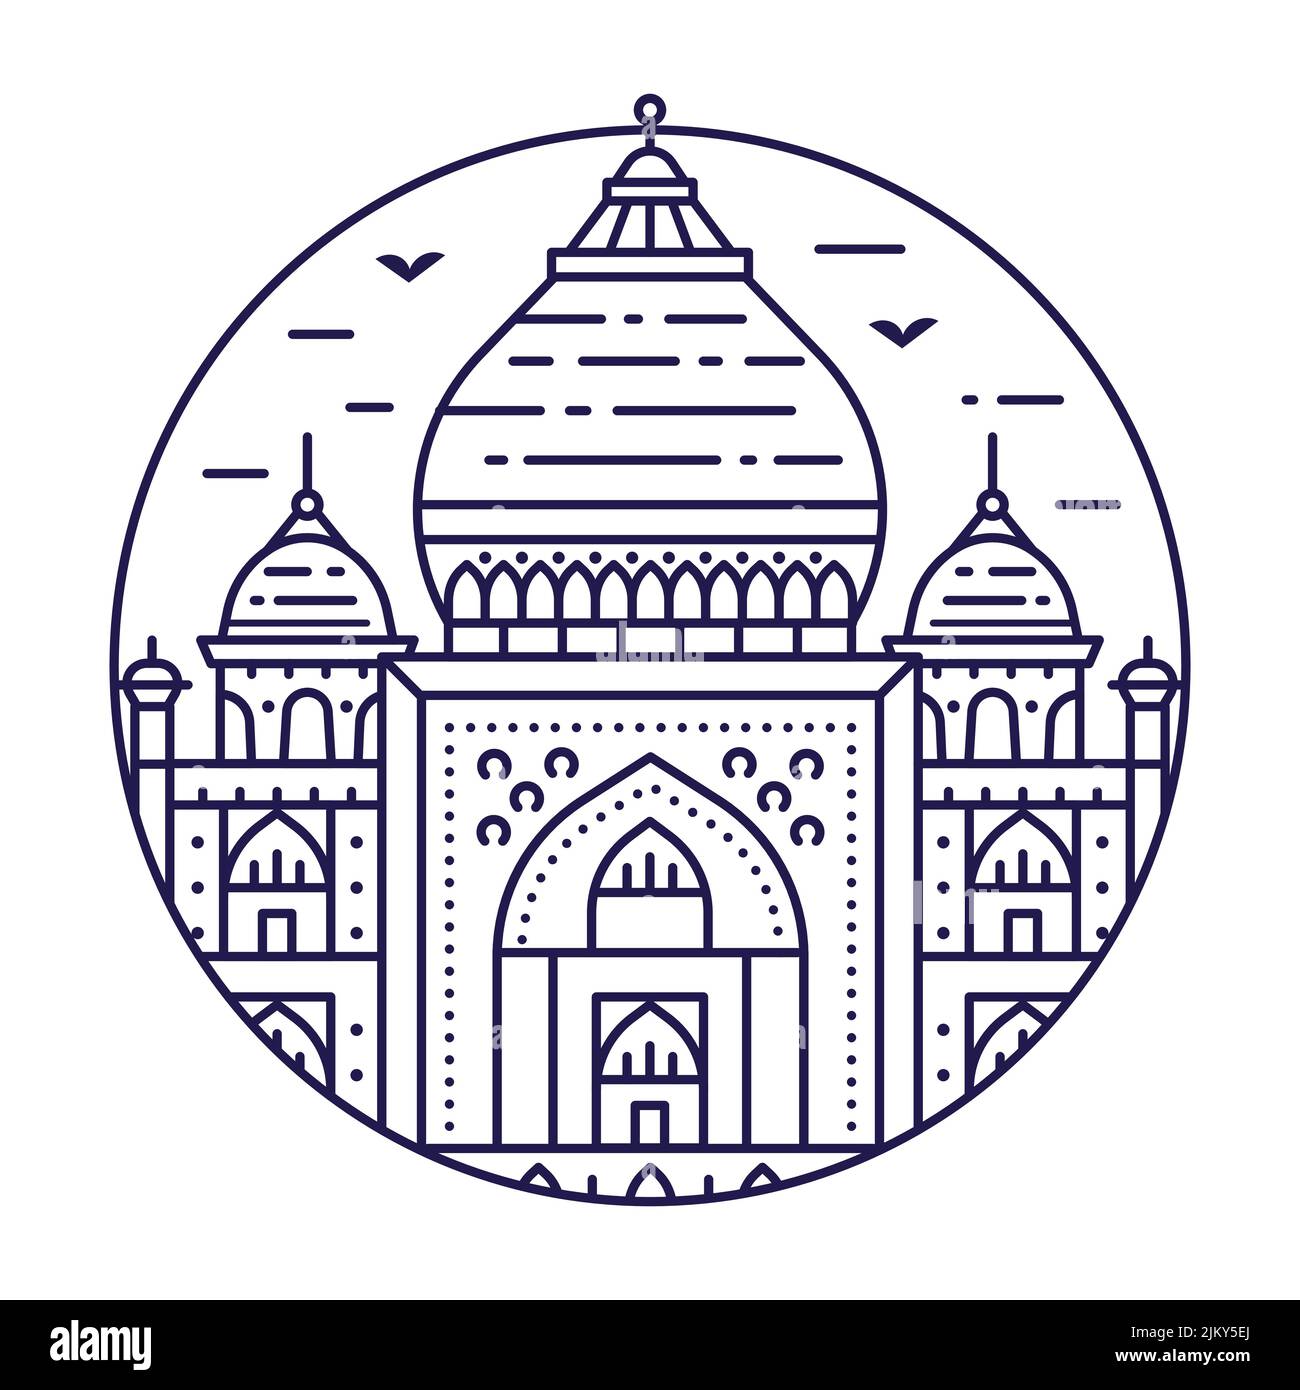 Taj Mahal India Circle Icon in Line Art Style Stock Vector